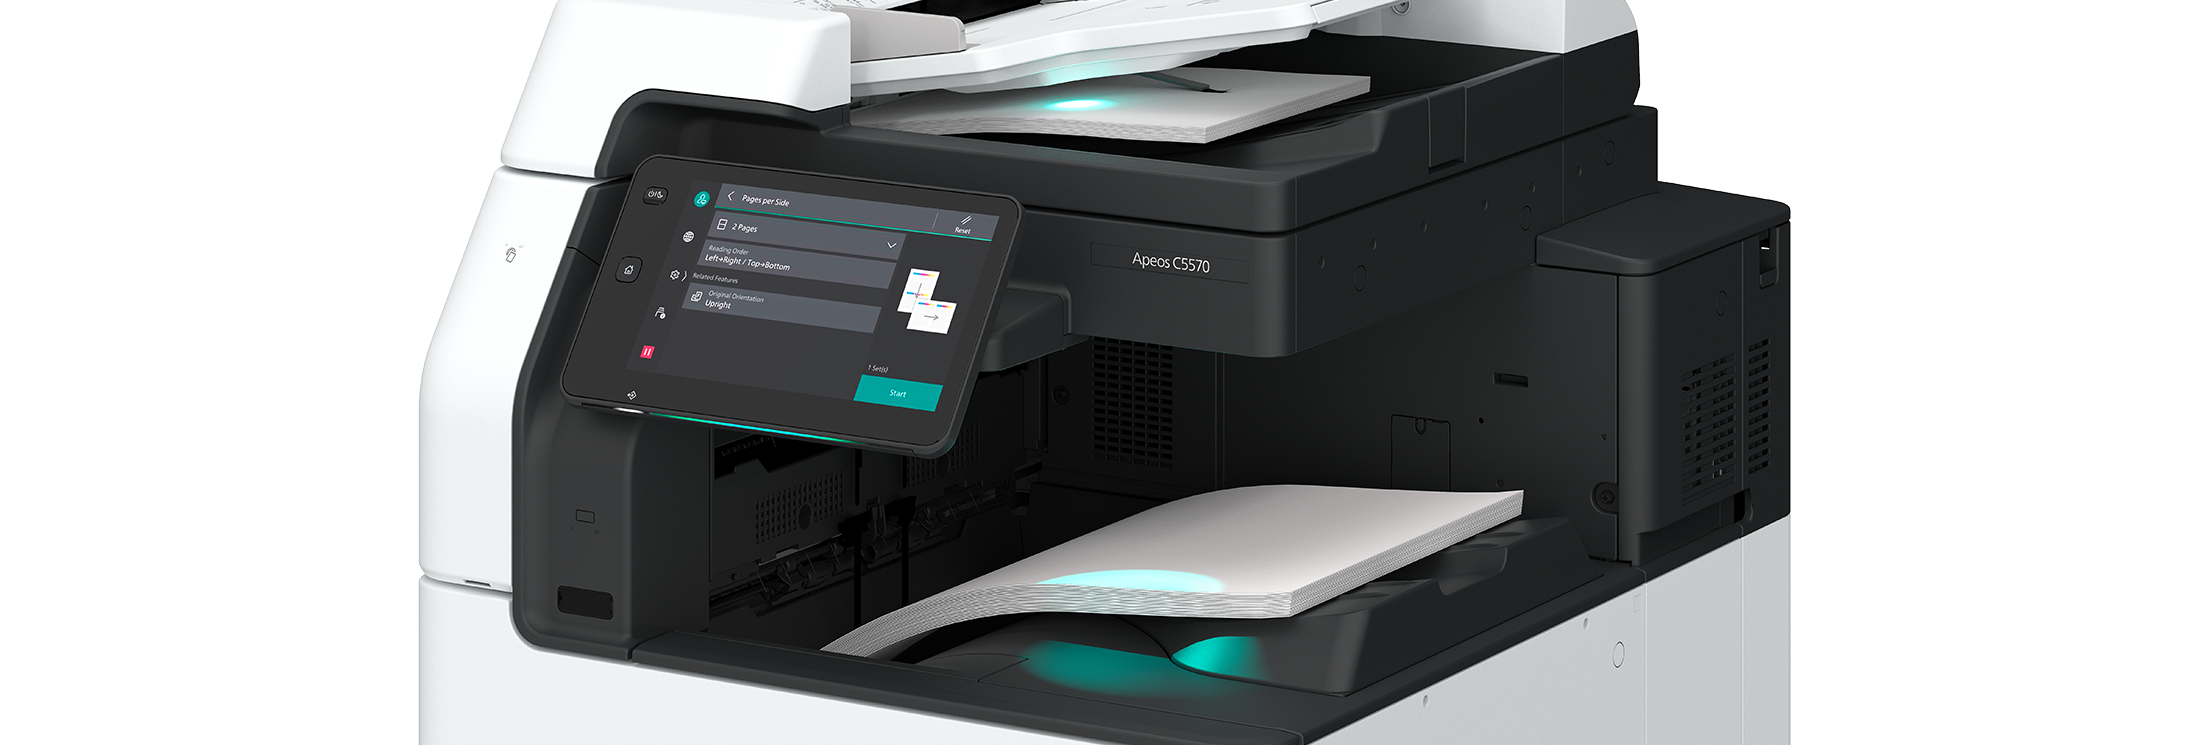 Máy Photocopy màu FujiFilm Apeos C4570